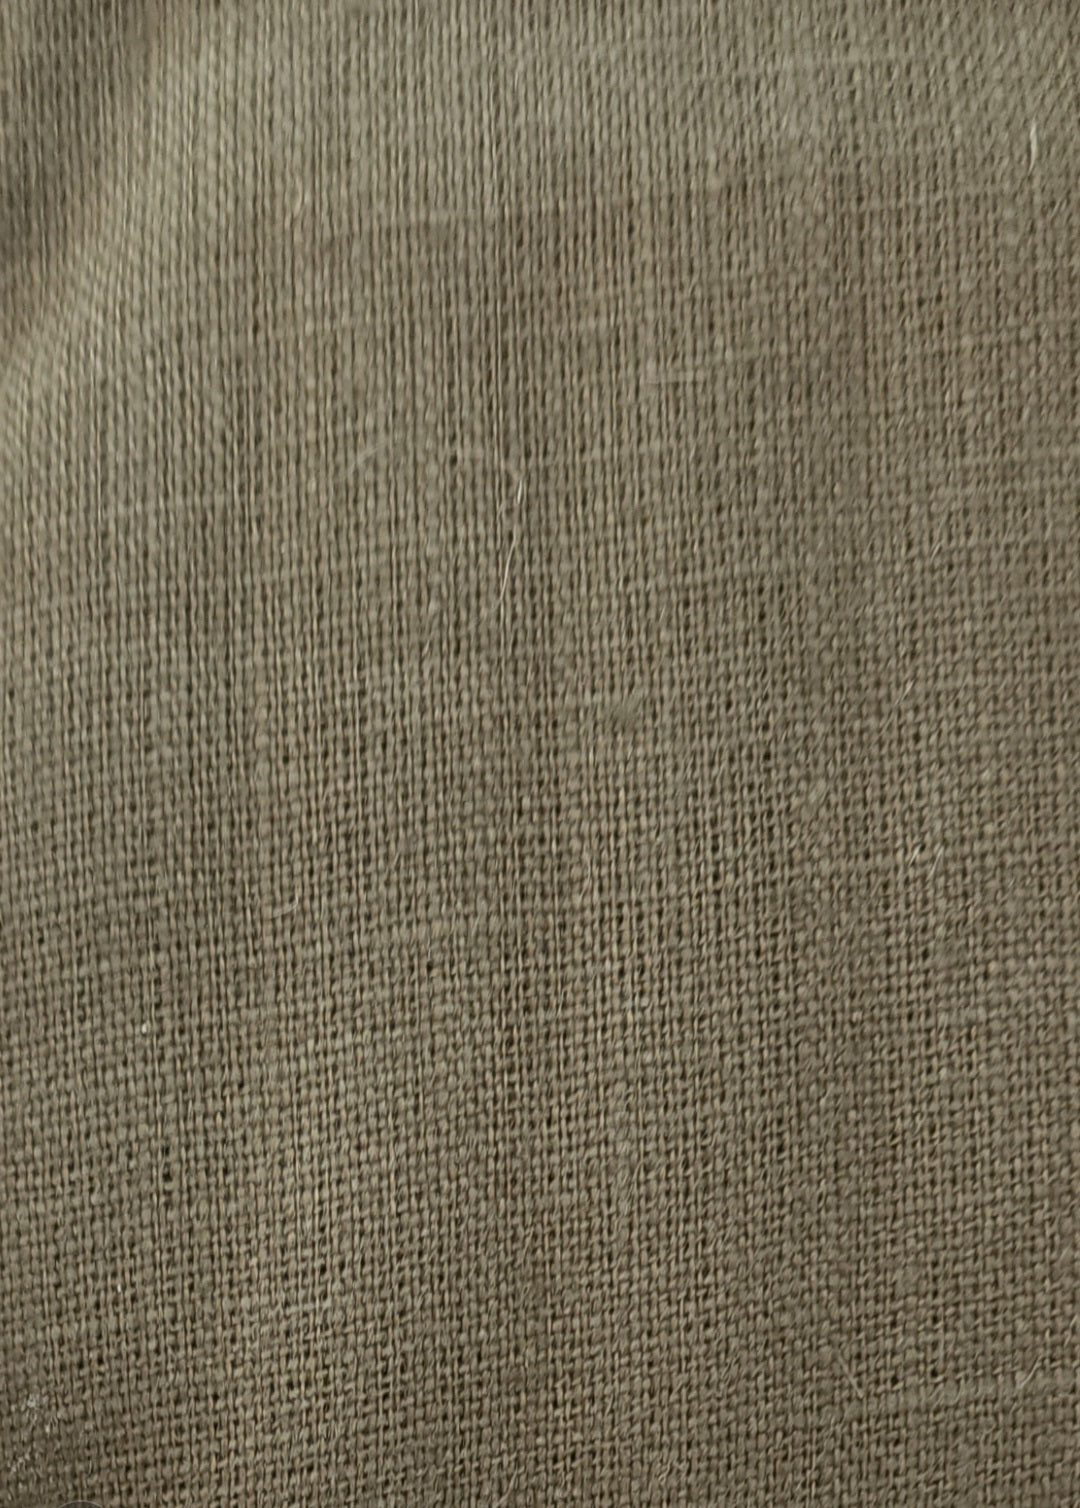 Pines - Linen Weave Fabric - 1 Yard